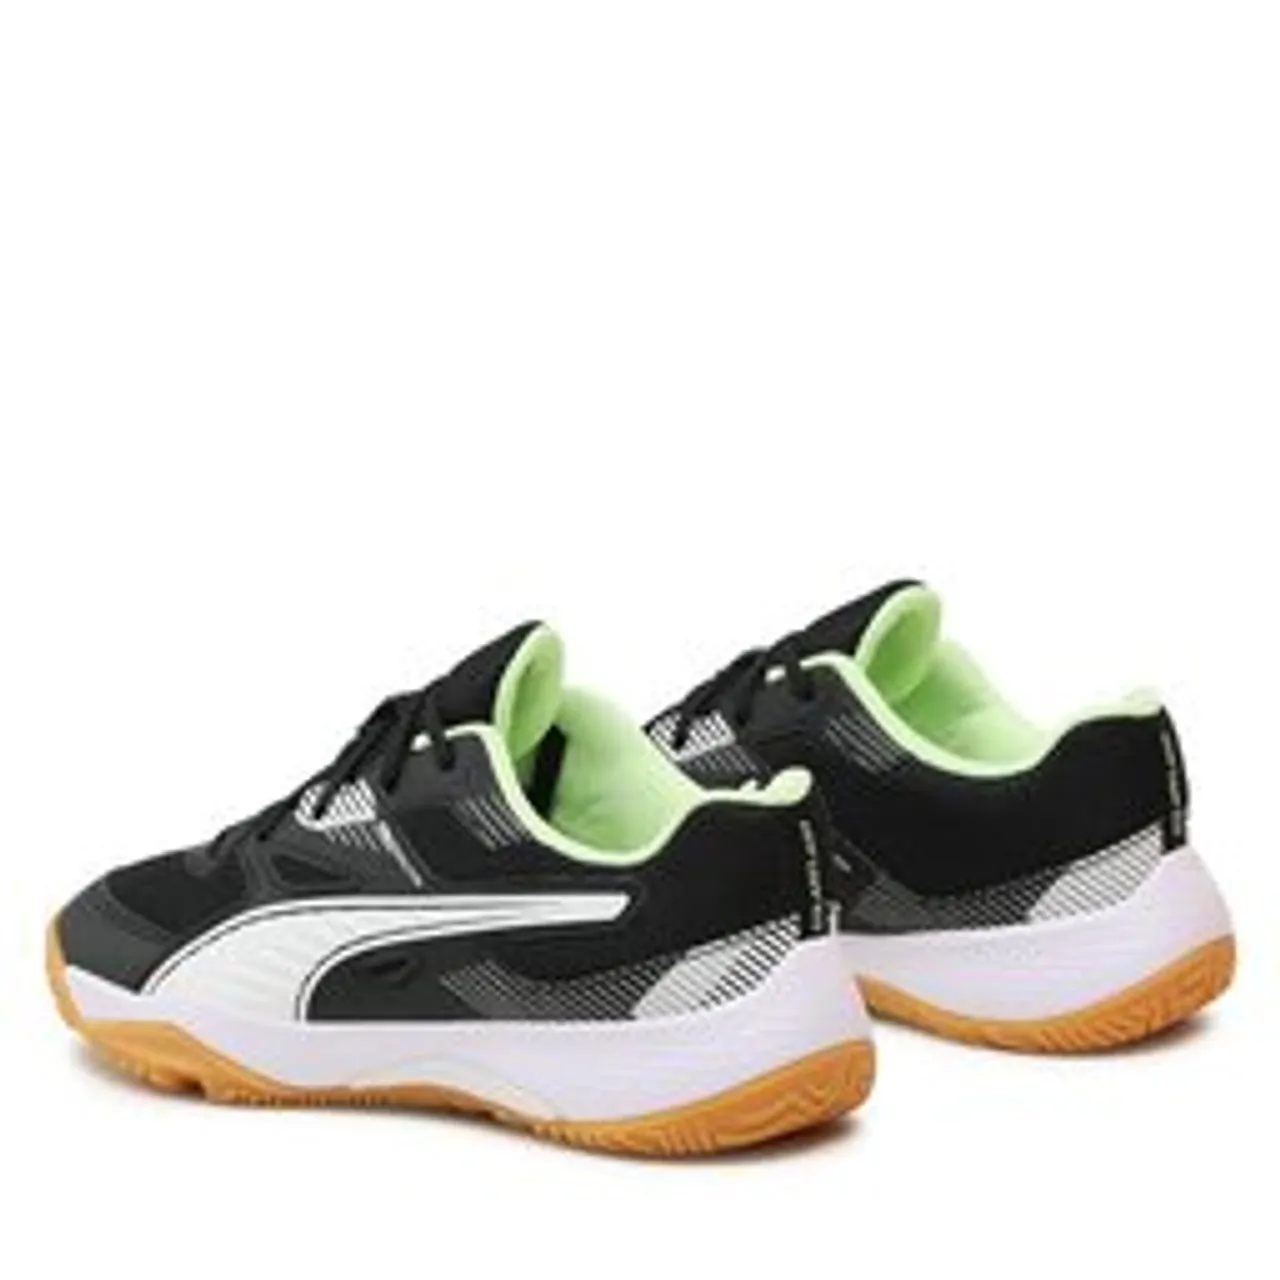 Schuhe Puma Solarflash Ii 106883 01 Black